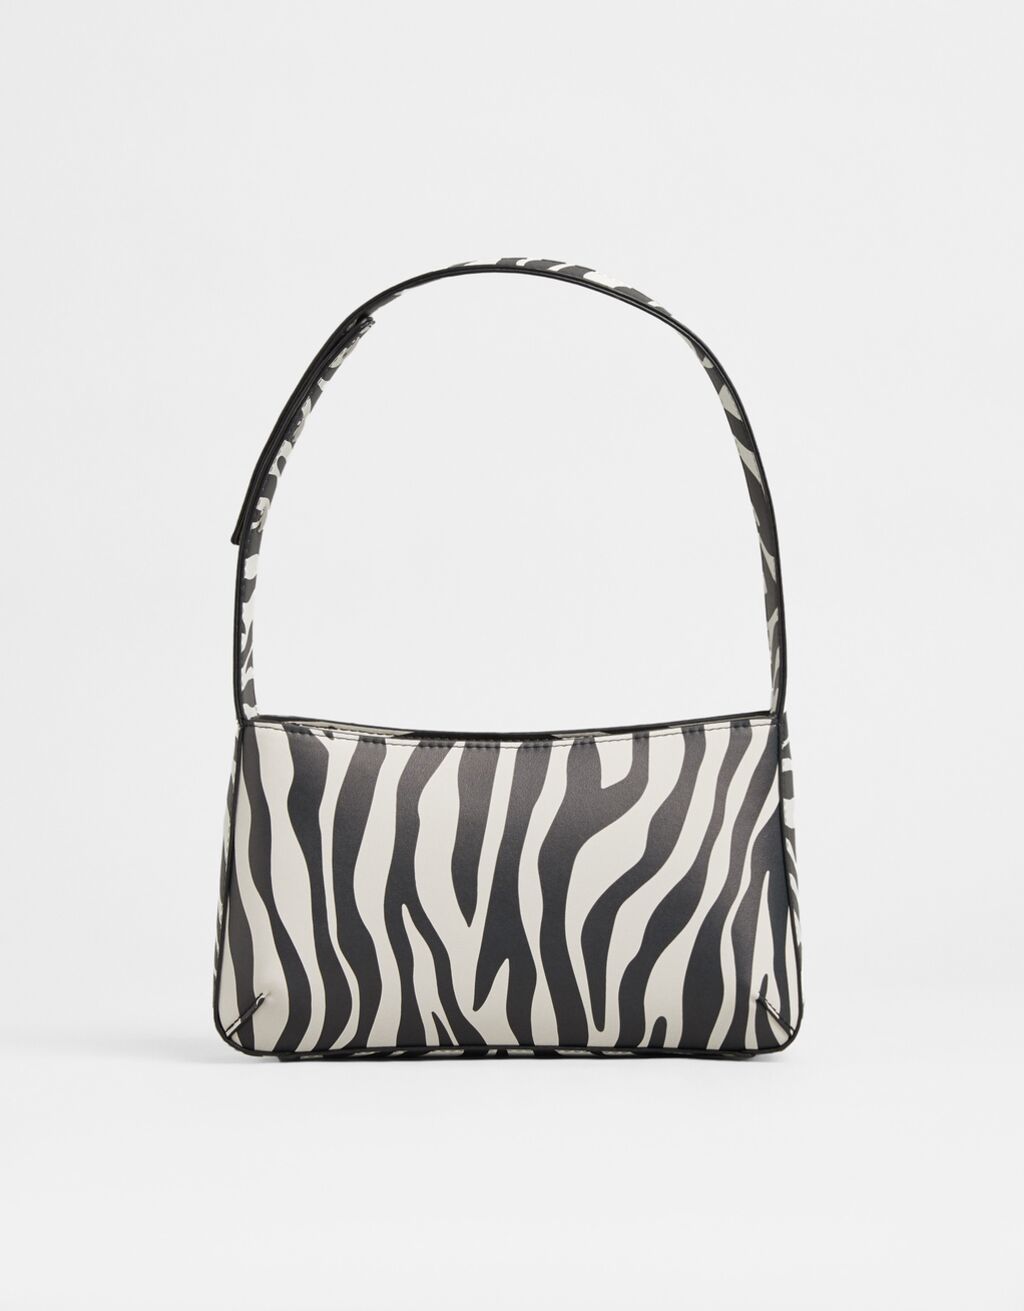 Zebra print handbag